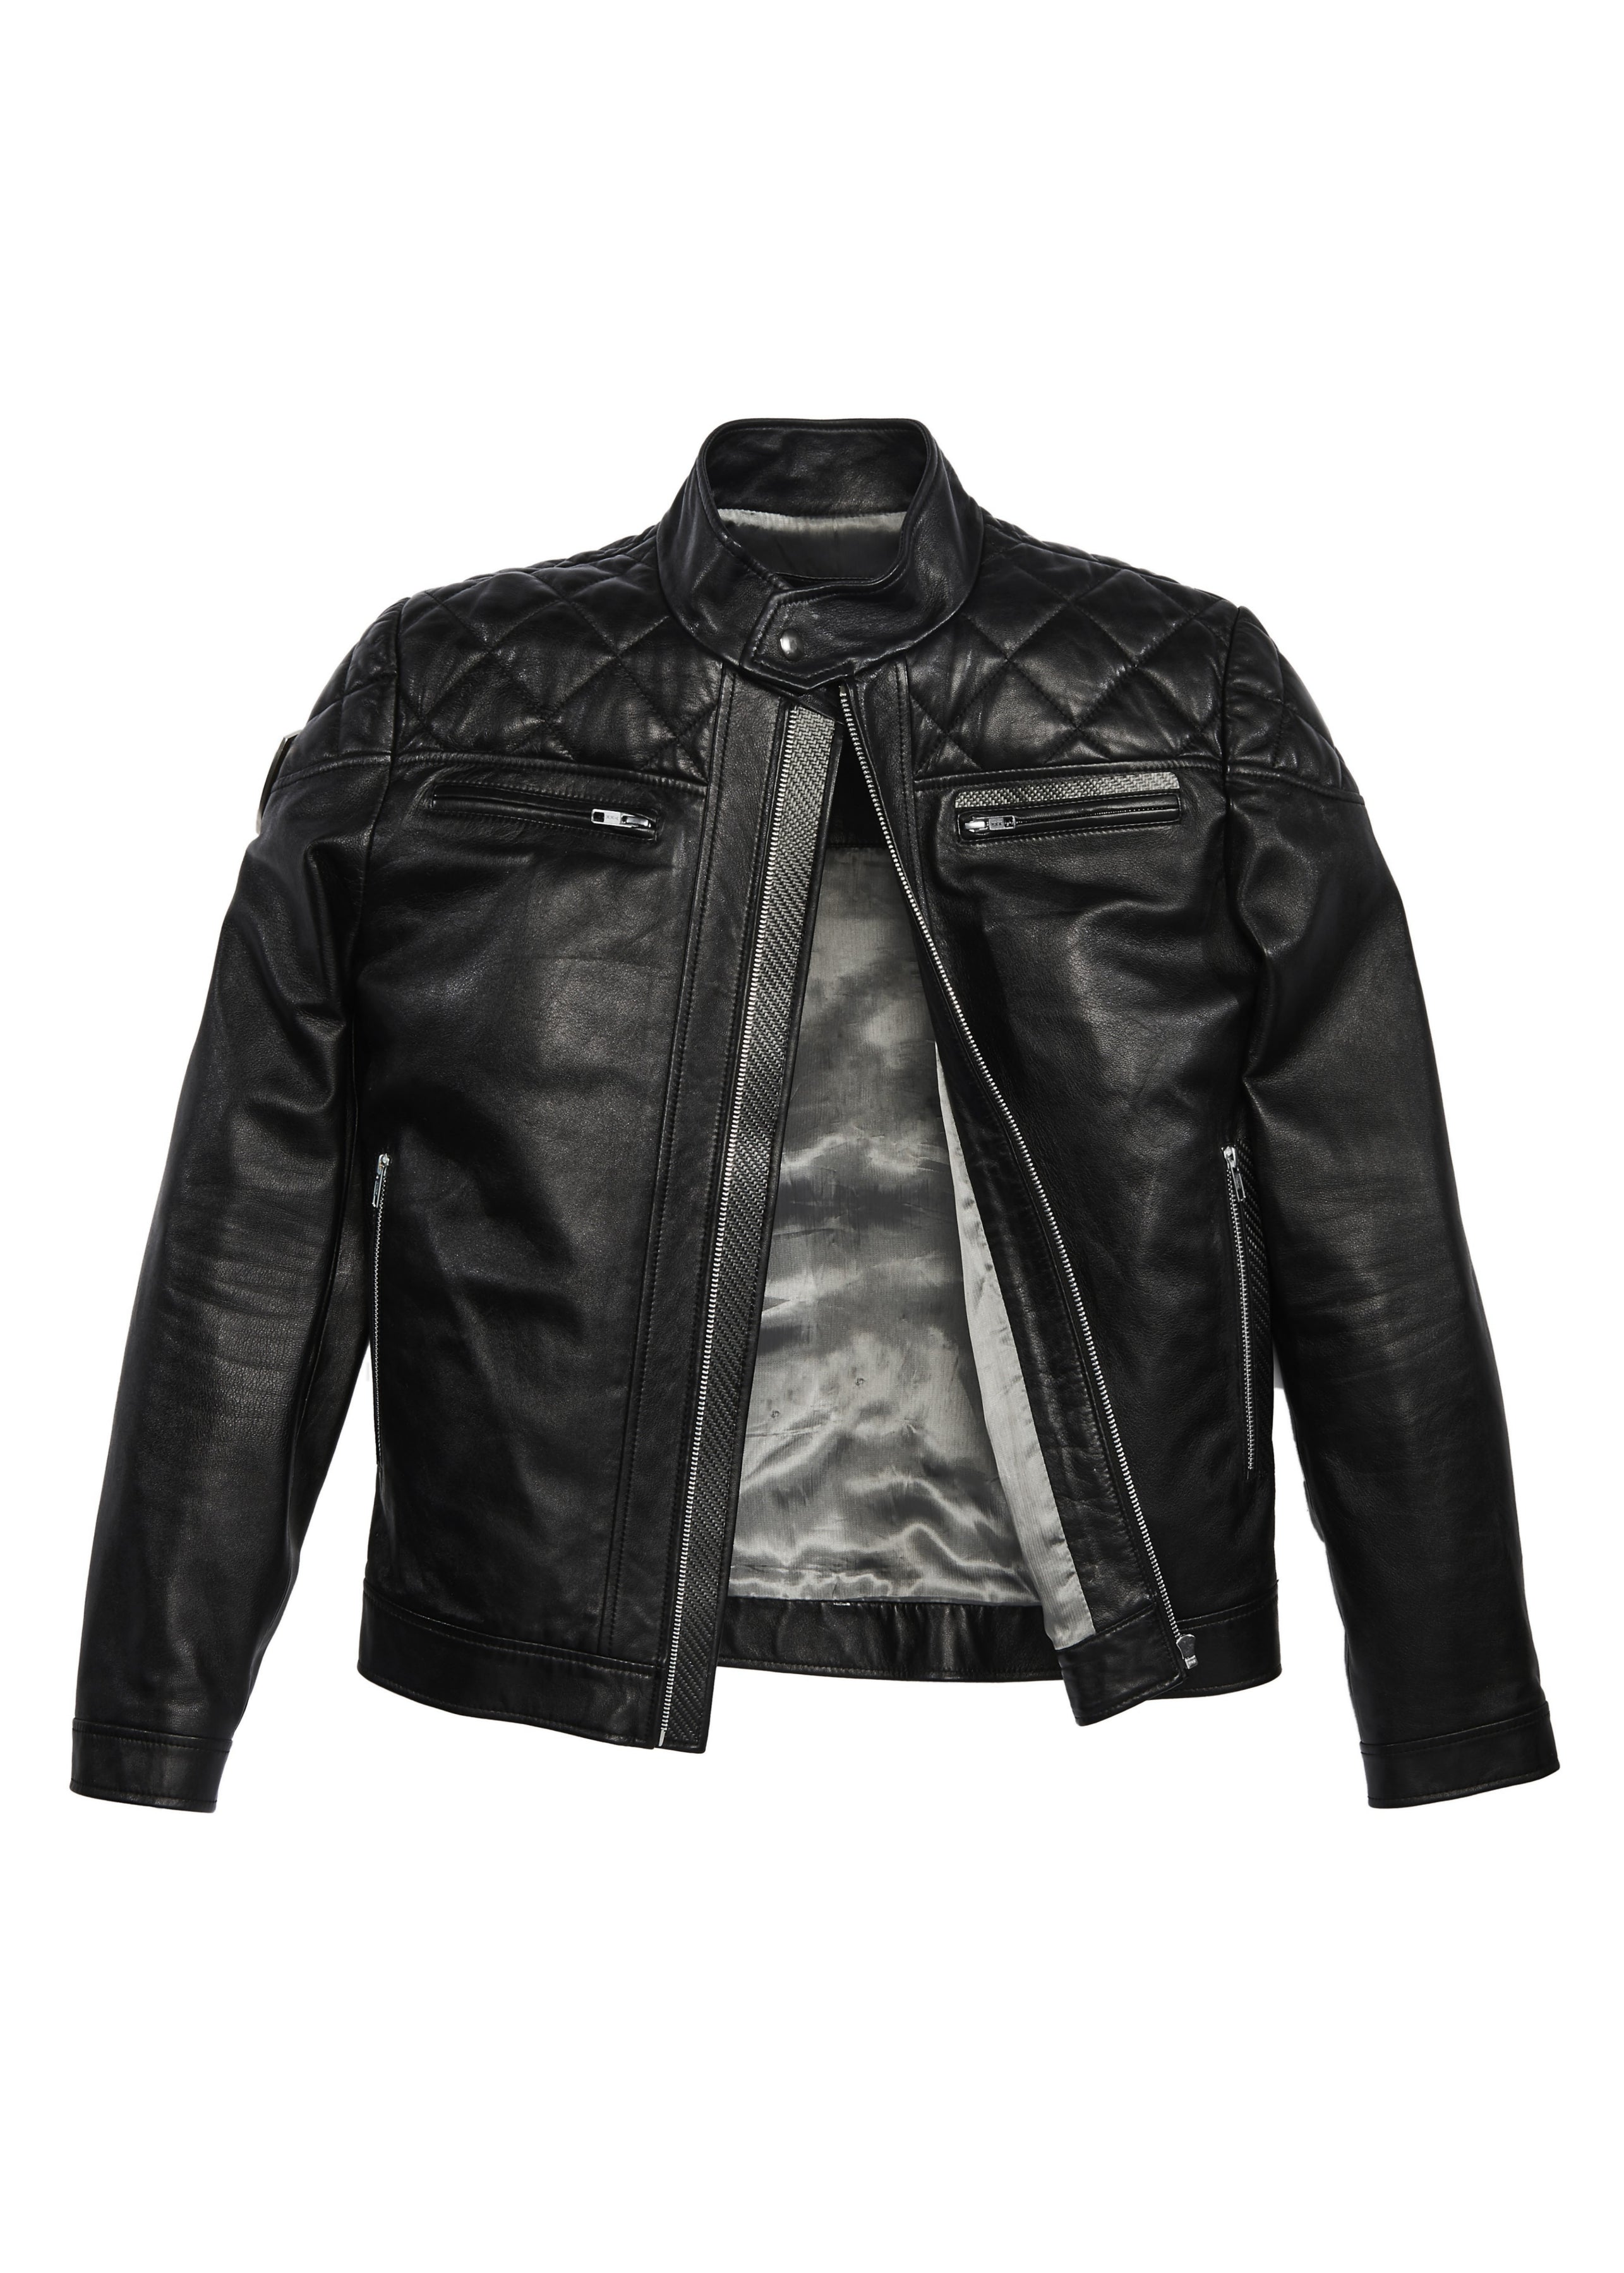 VINCI Leather Jacket for Men | Lambskin Leather Jacket Canada